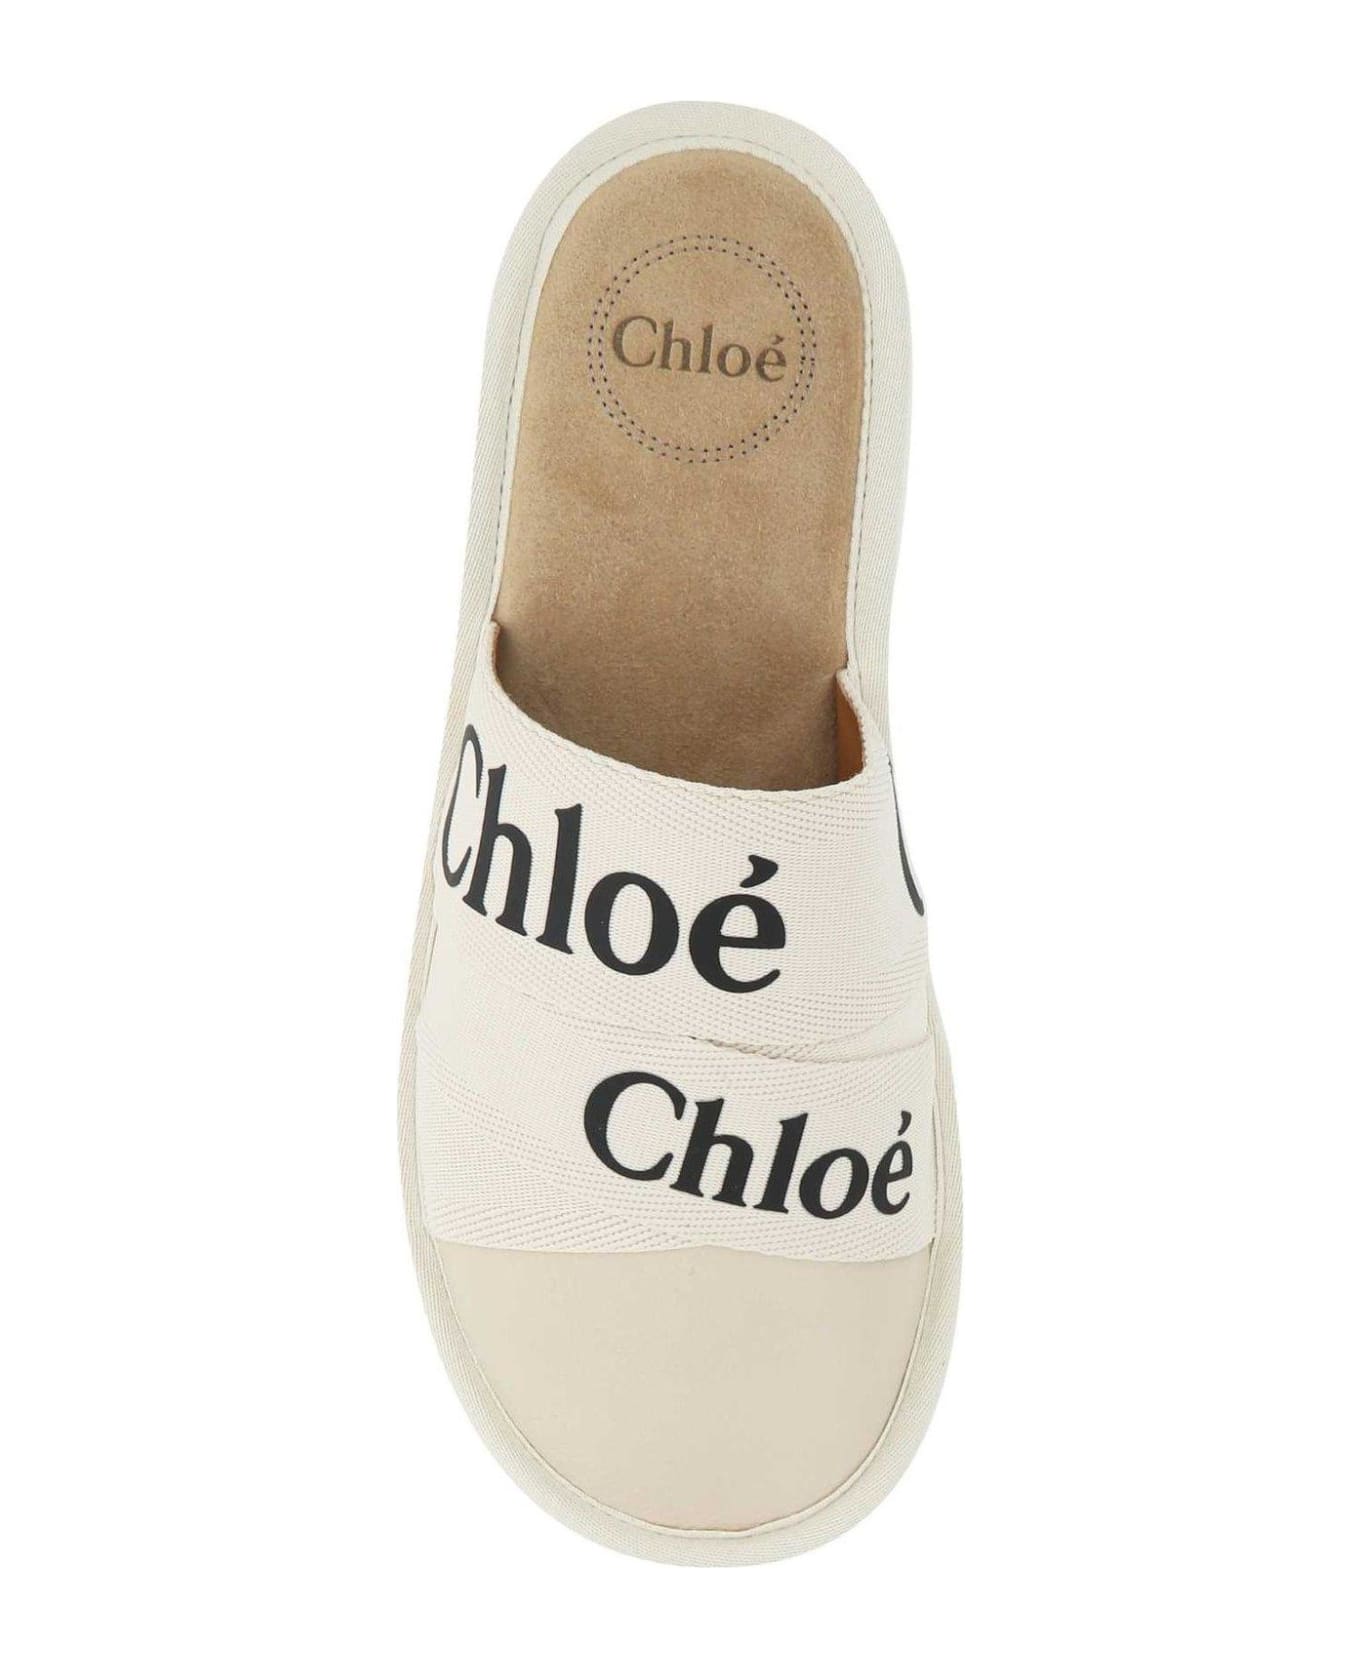 Chloé Logo Band Slippers - White サンダル